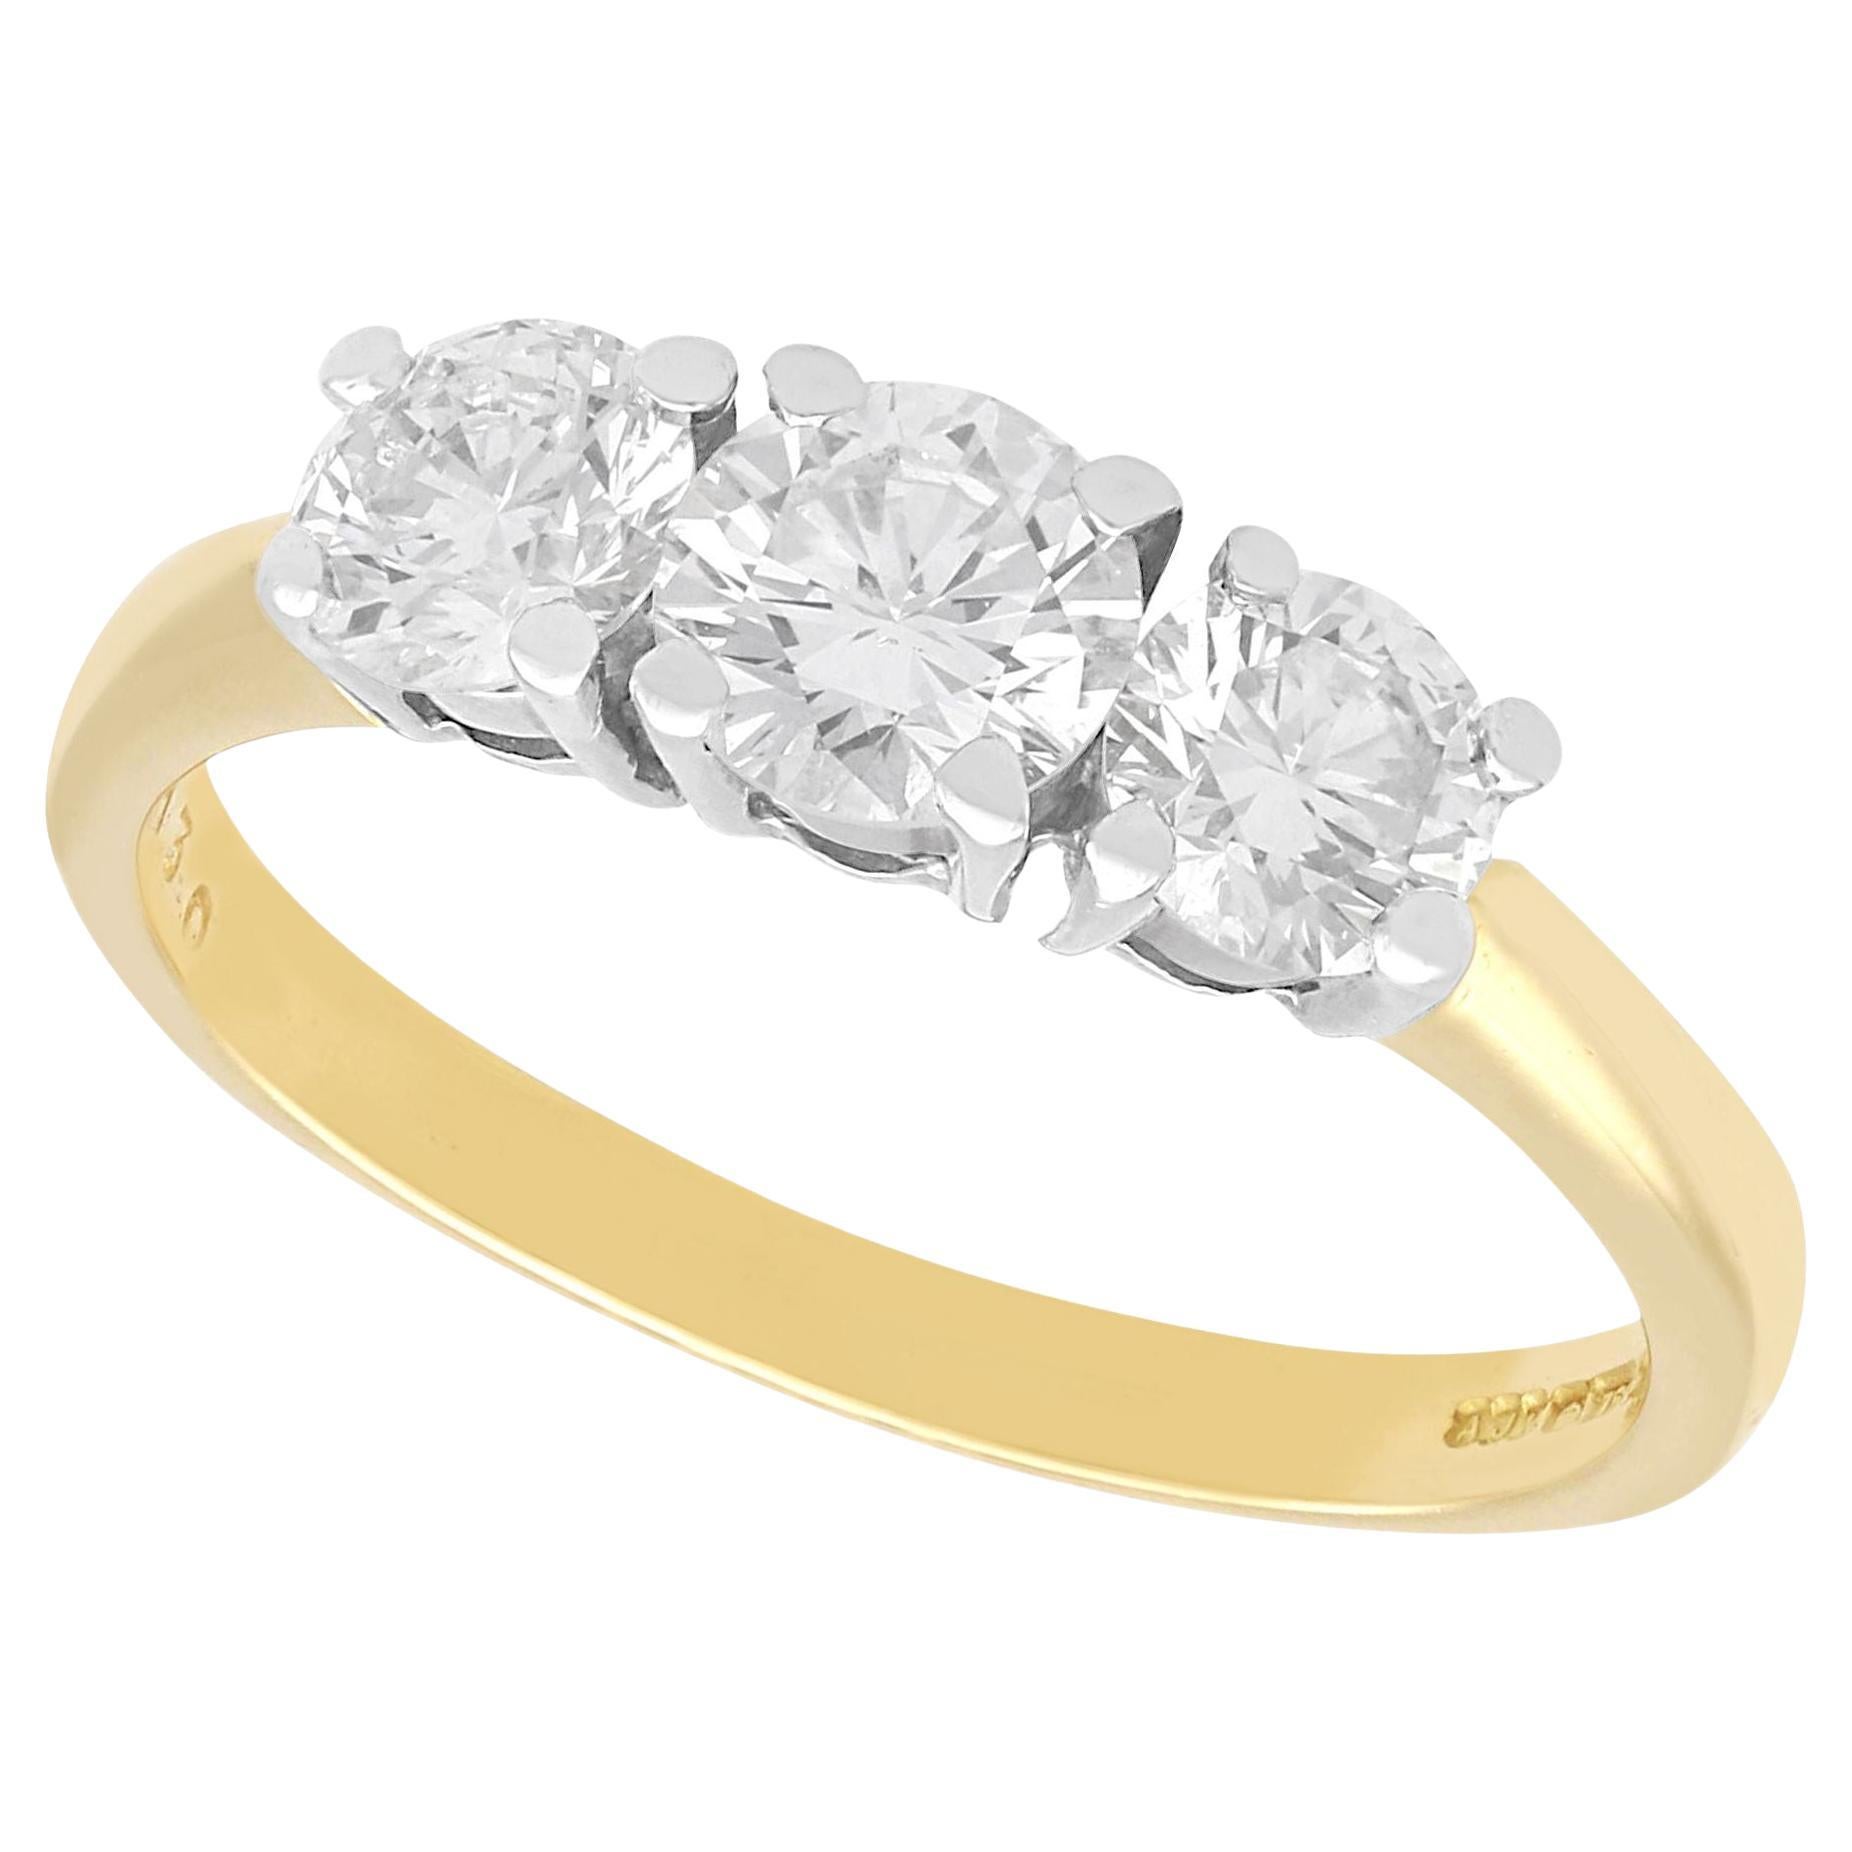 1.30 Carat Diamond and 18k Yellow Gold Trilogy Ring